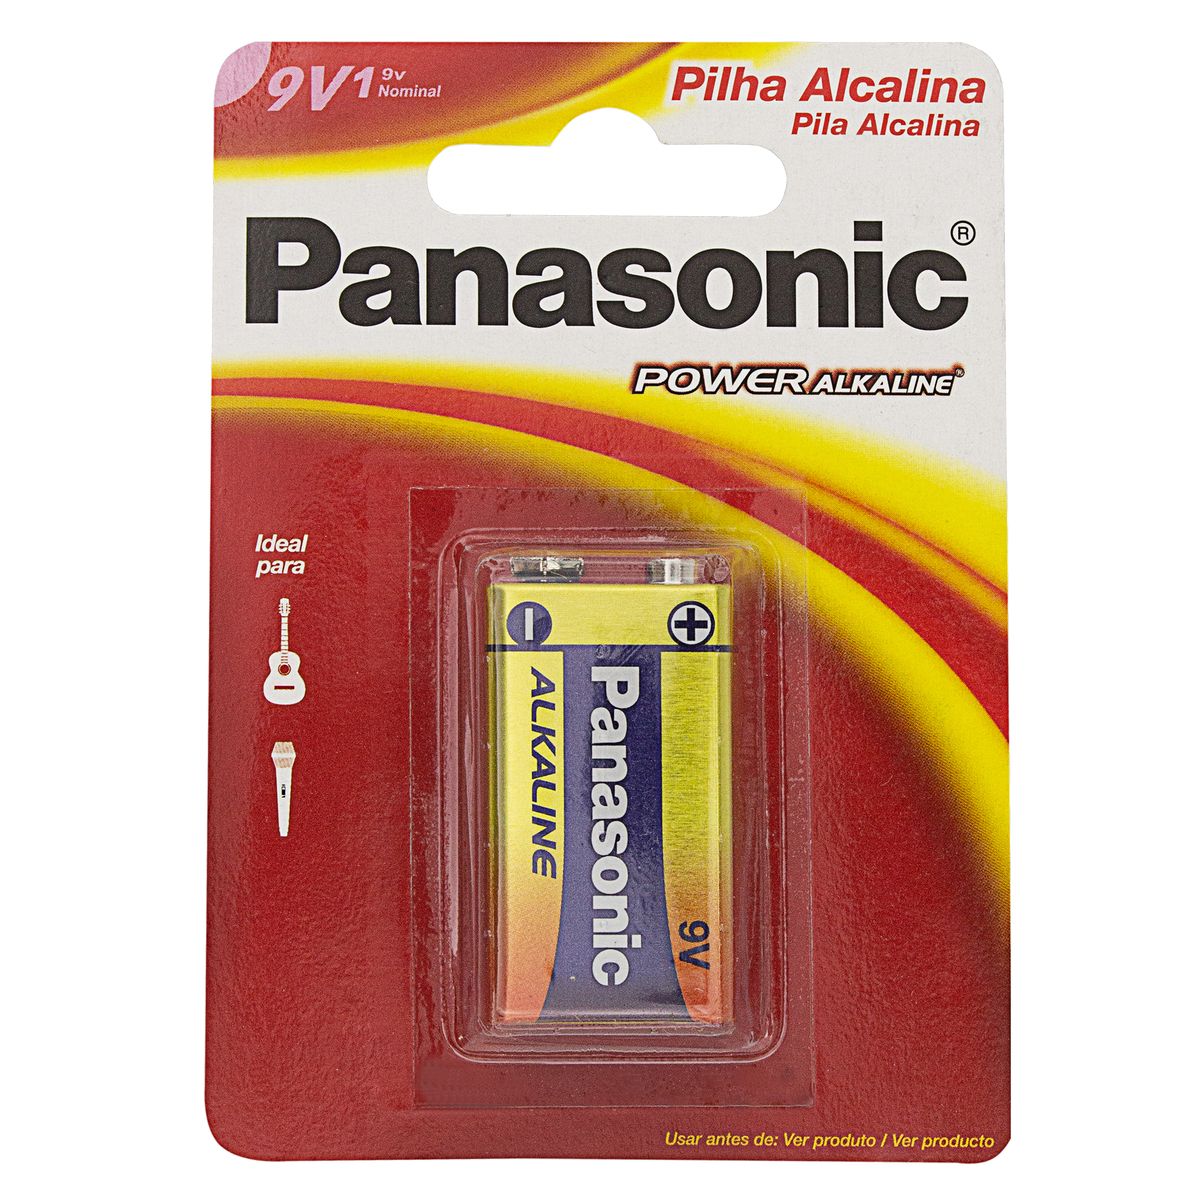 Pilha Alcalina Panasonic Power Alkaline 9V